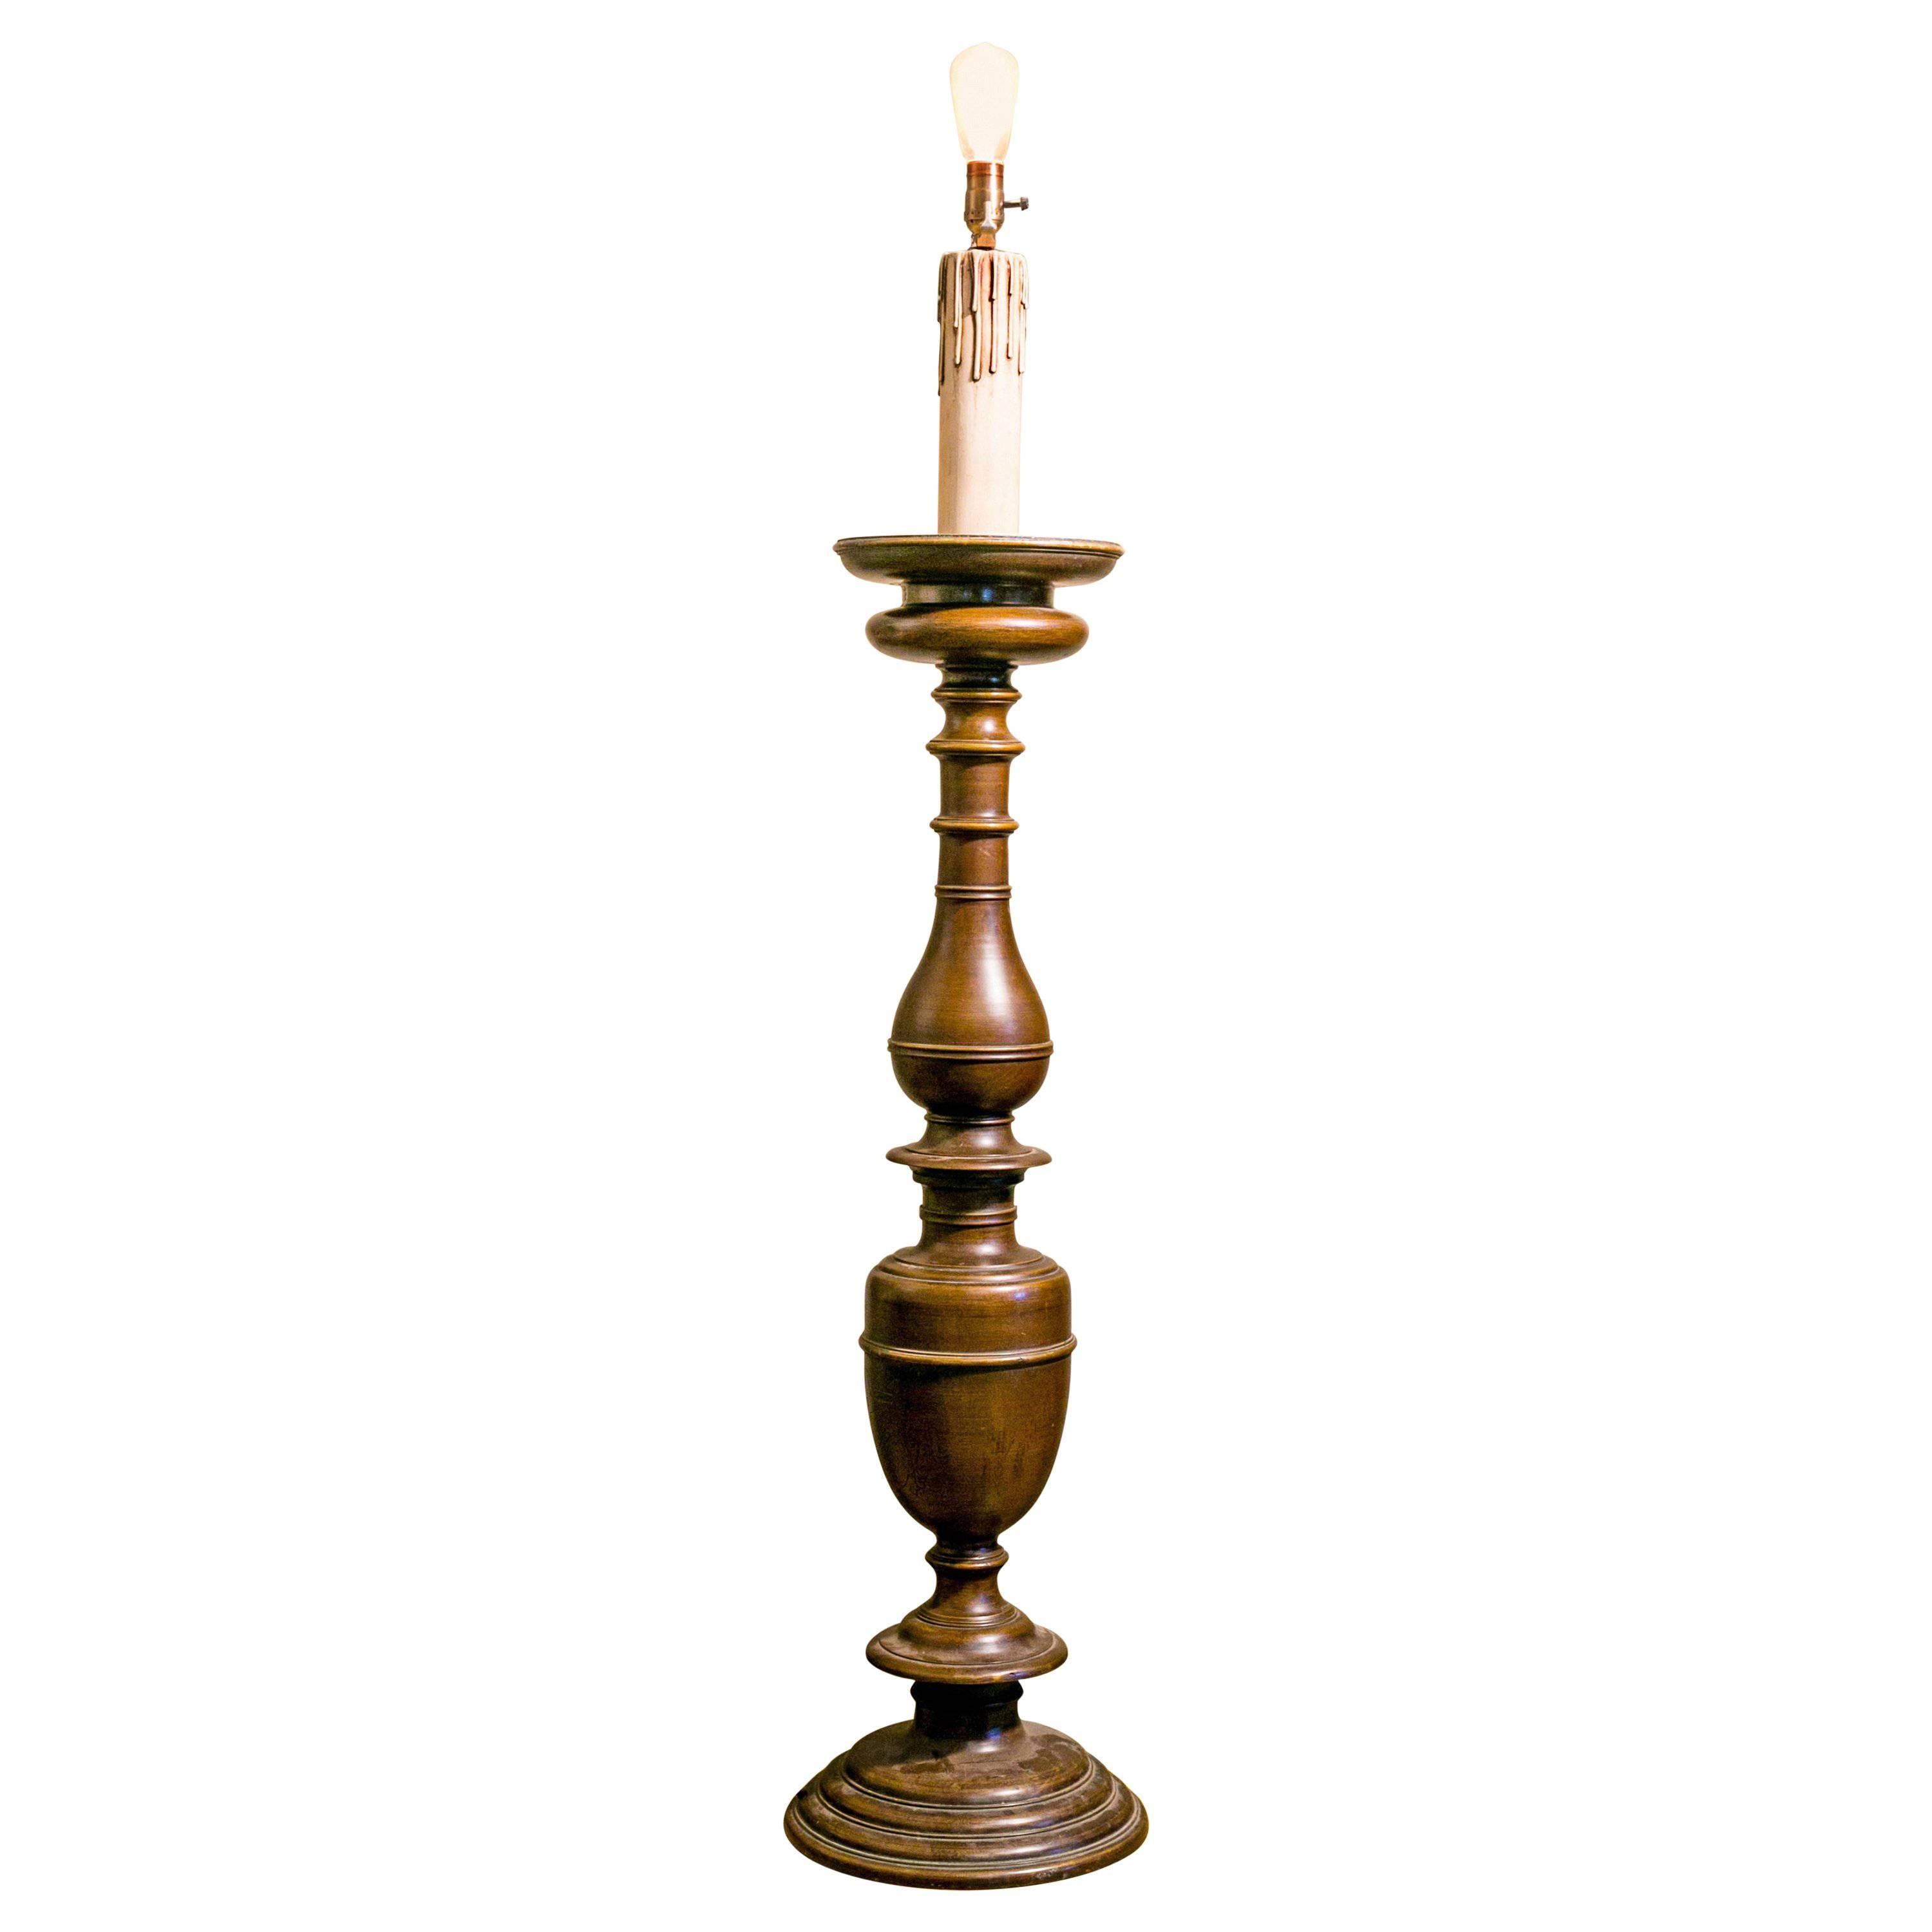 Heavy Flemish Bronze Floor Lamp from Belgium, circa 1910